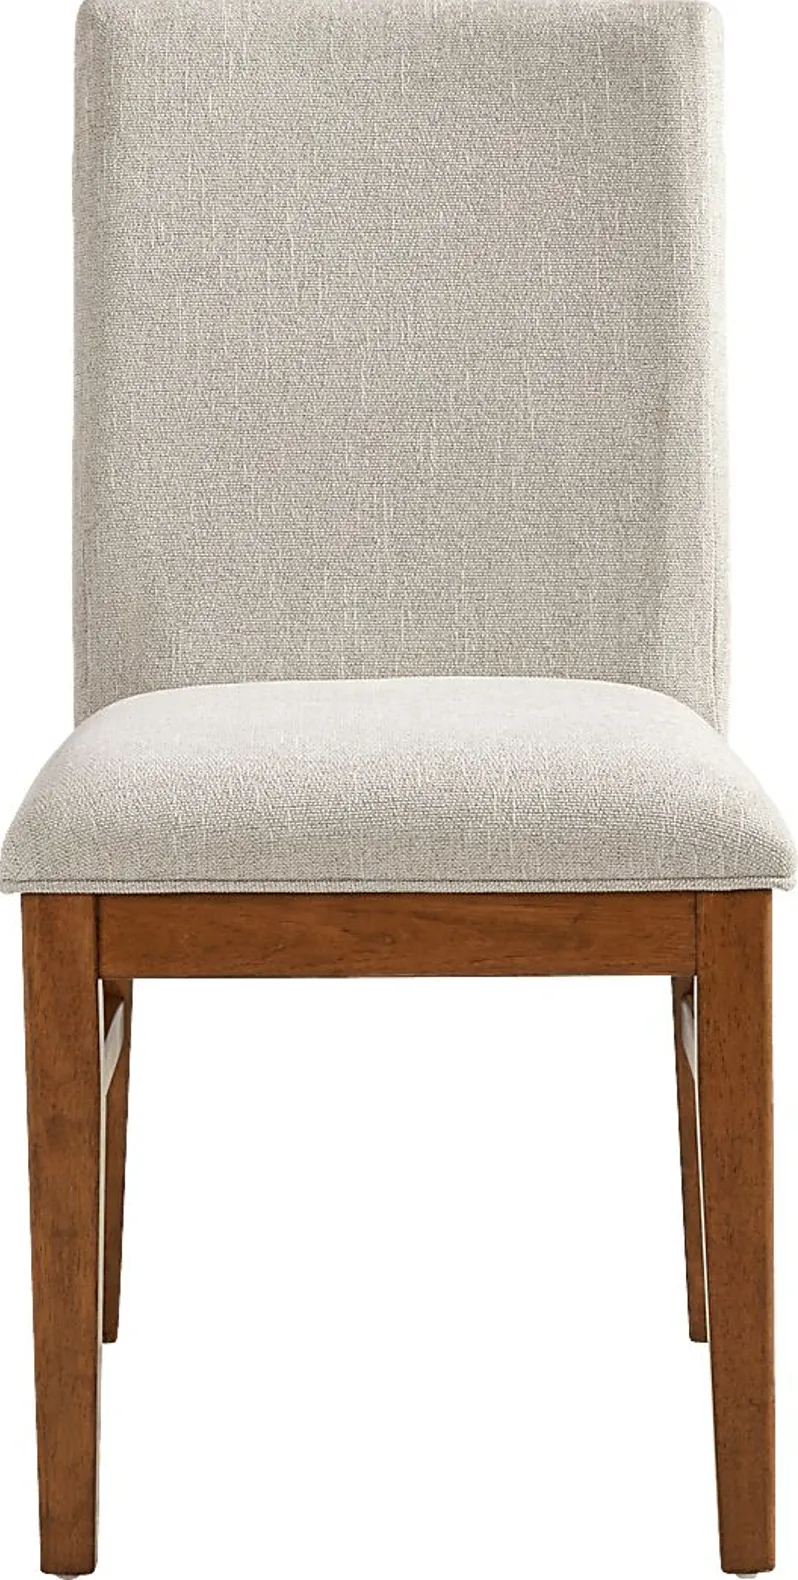 Surrey Ellis Beige Upholstered Chair